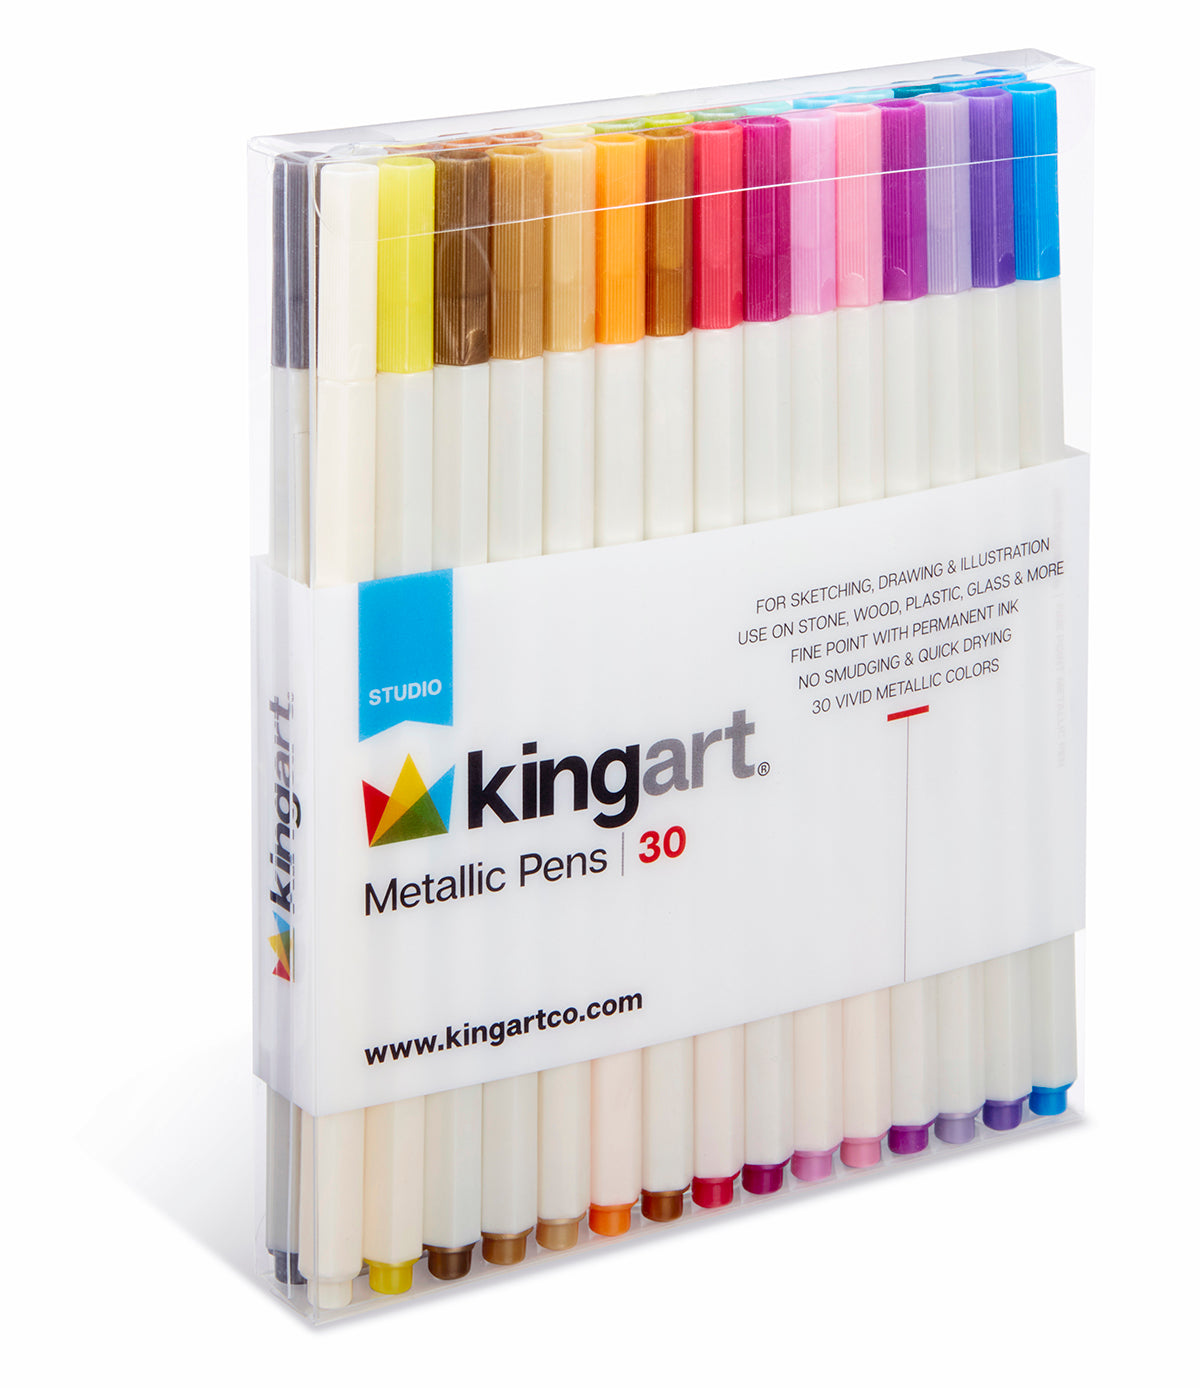 KingArt RNAB09RSL3QC9 kingart studio twin-tip sketch markers, set of 24  unique & vivid colors